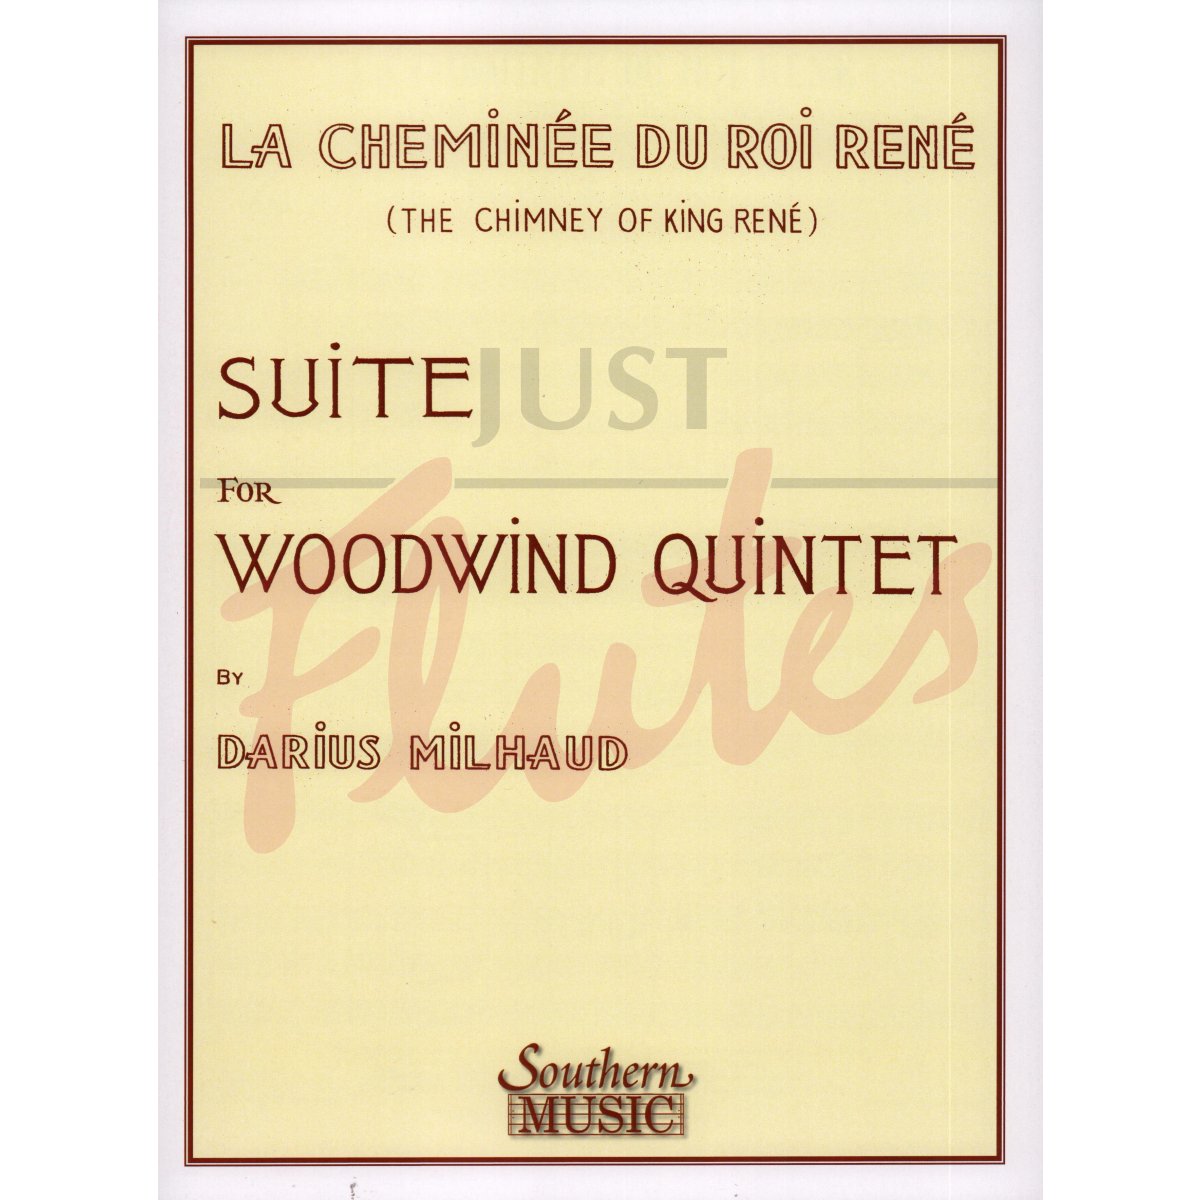 La Cheminee du Roi Rene (Chimney Of King Rene) Suite for Woodwind Quintet